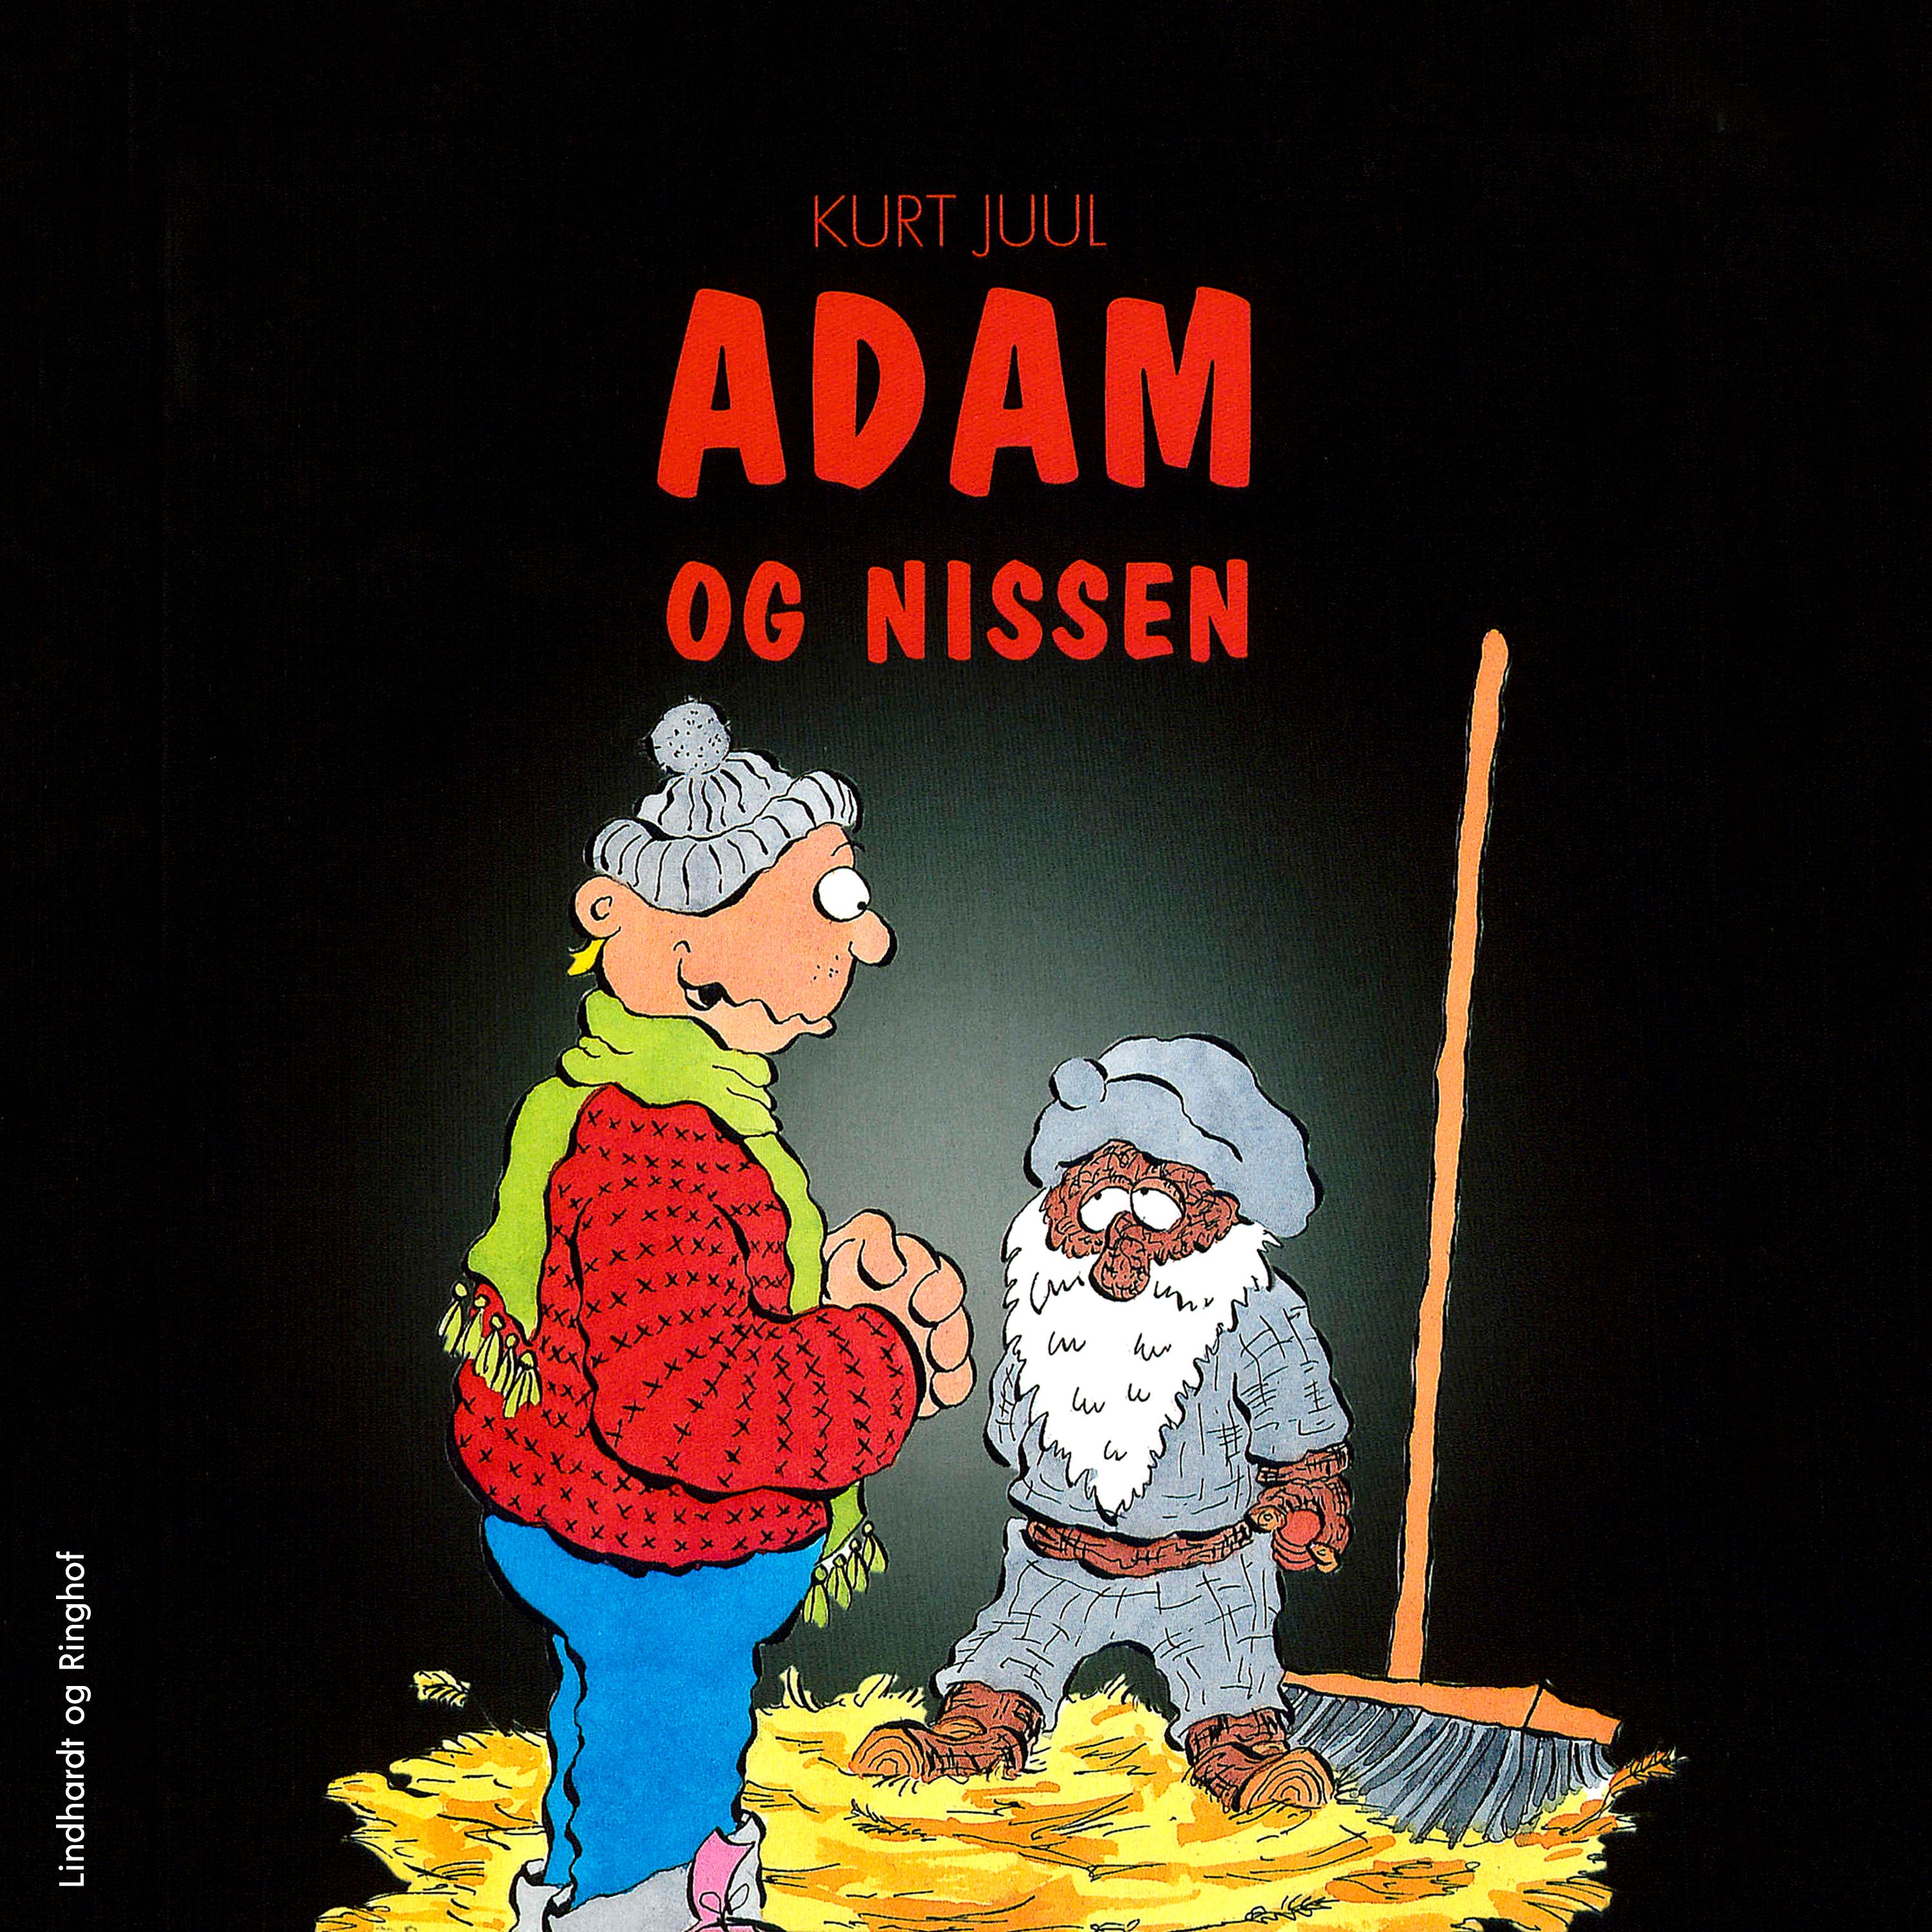 Adam og nissen, ljudbok av Kurt Juul